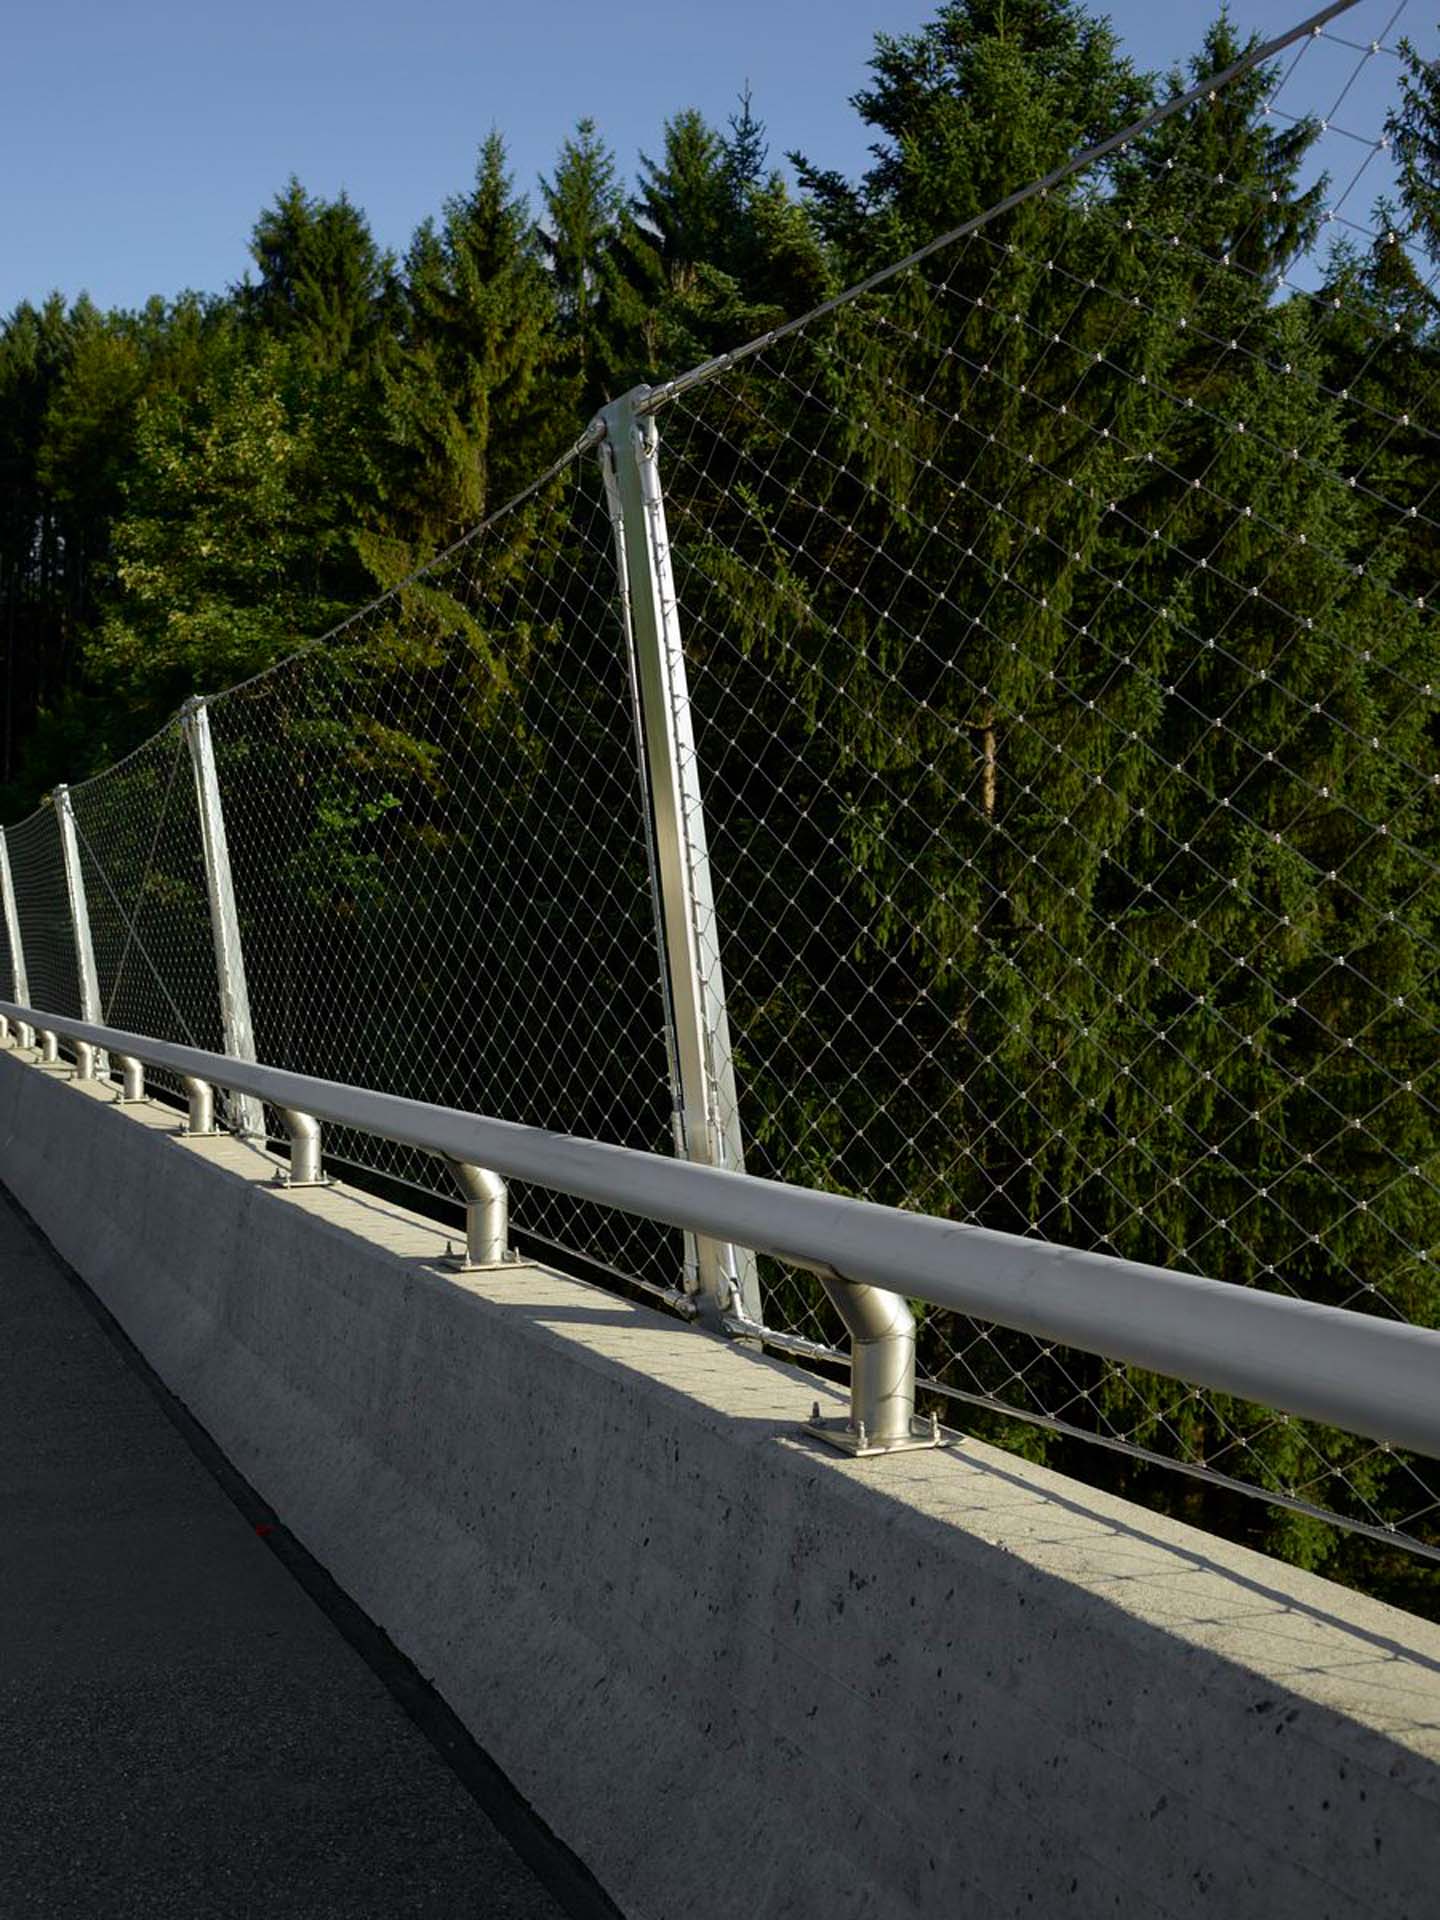 Hundwilertobel bridge safety fence